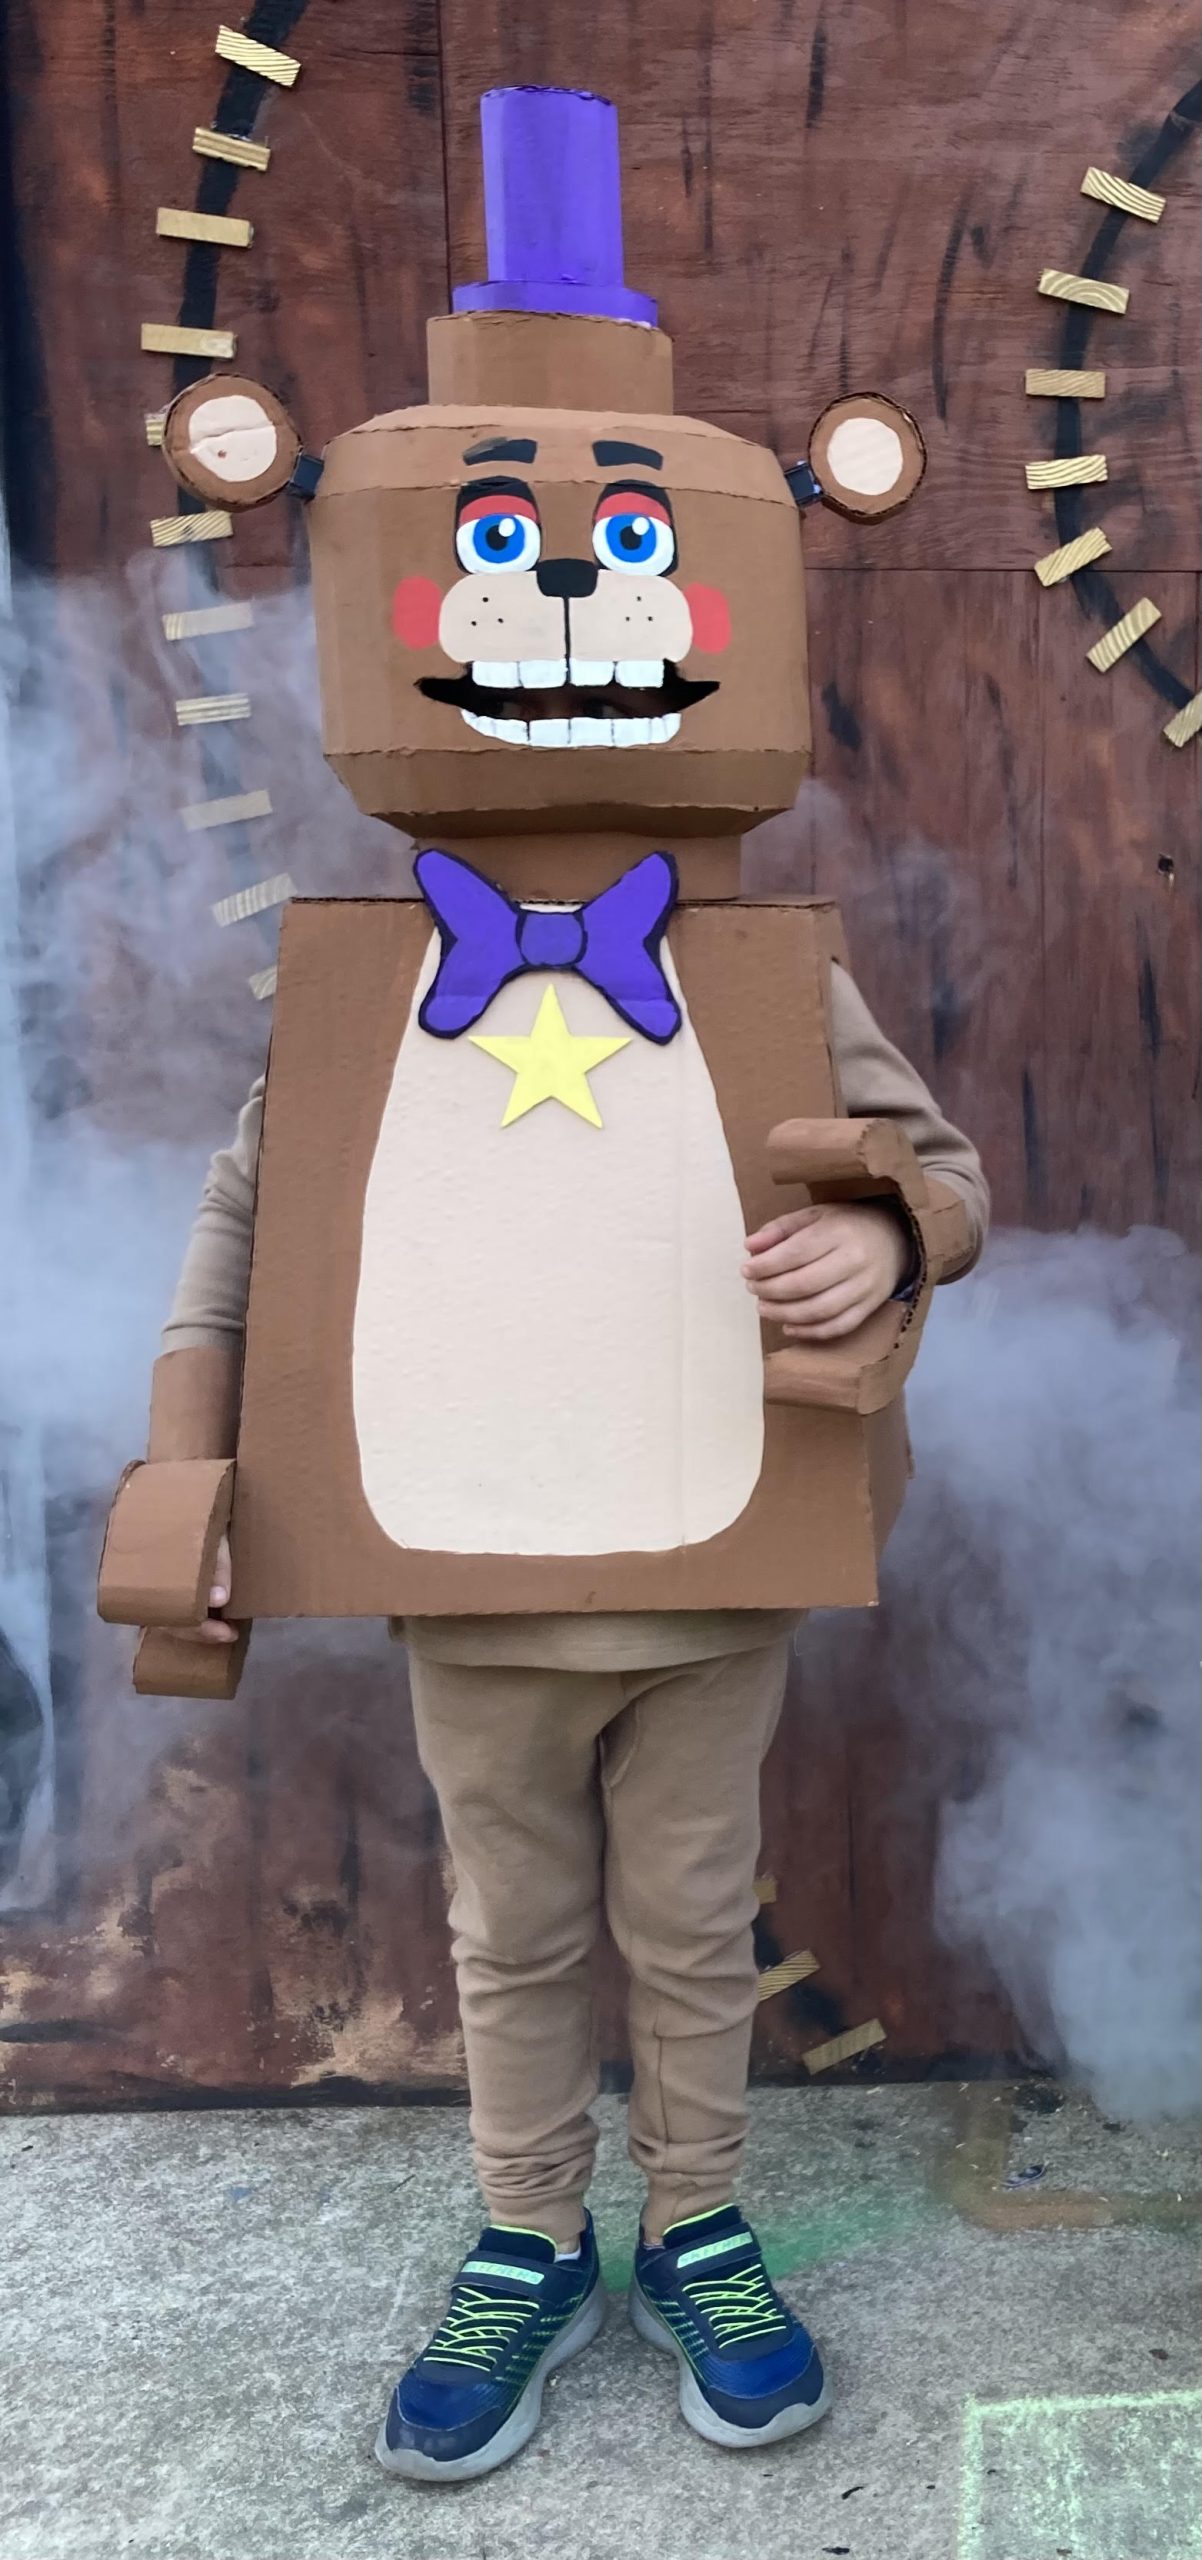 Five Nights at Freddys Costume - Rock Star Freddy Meets Lego Man